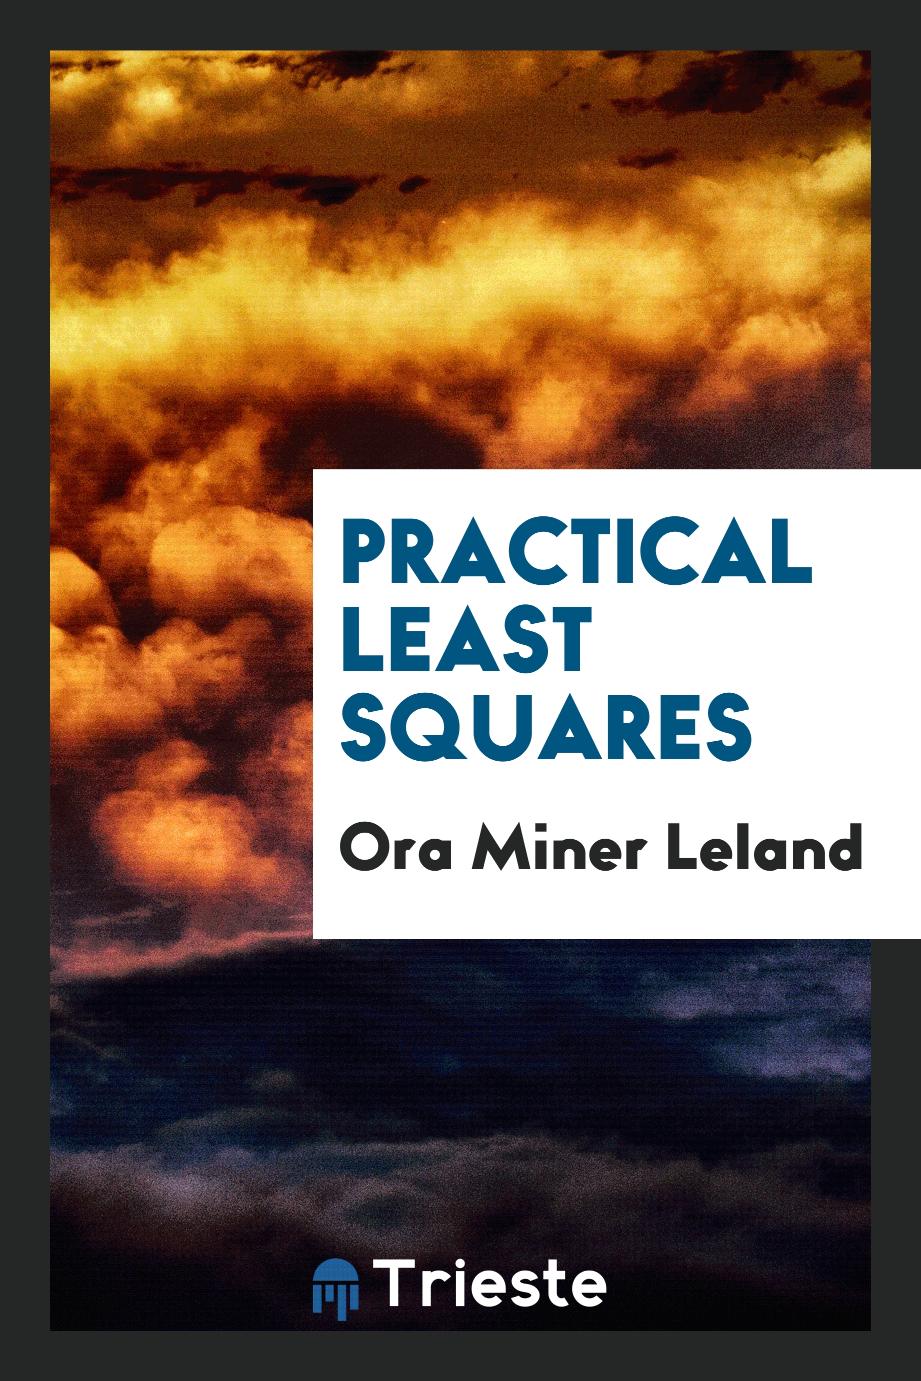 Practical least squares